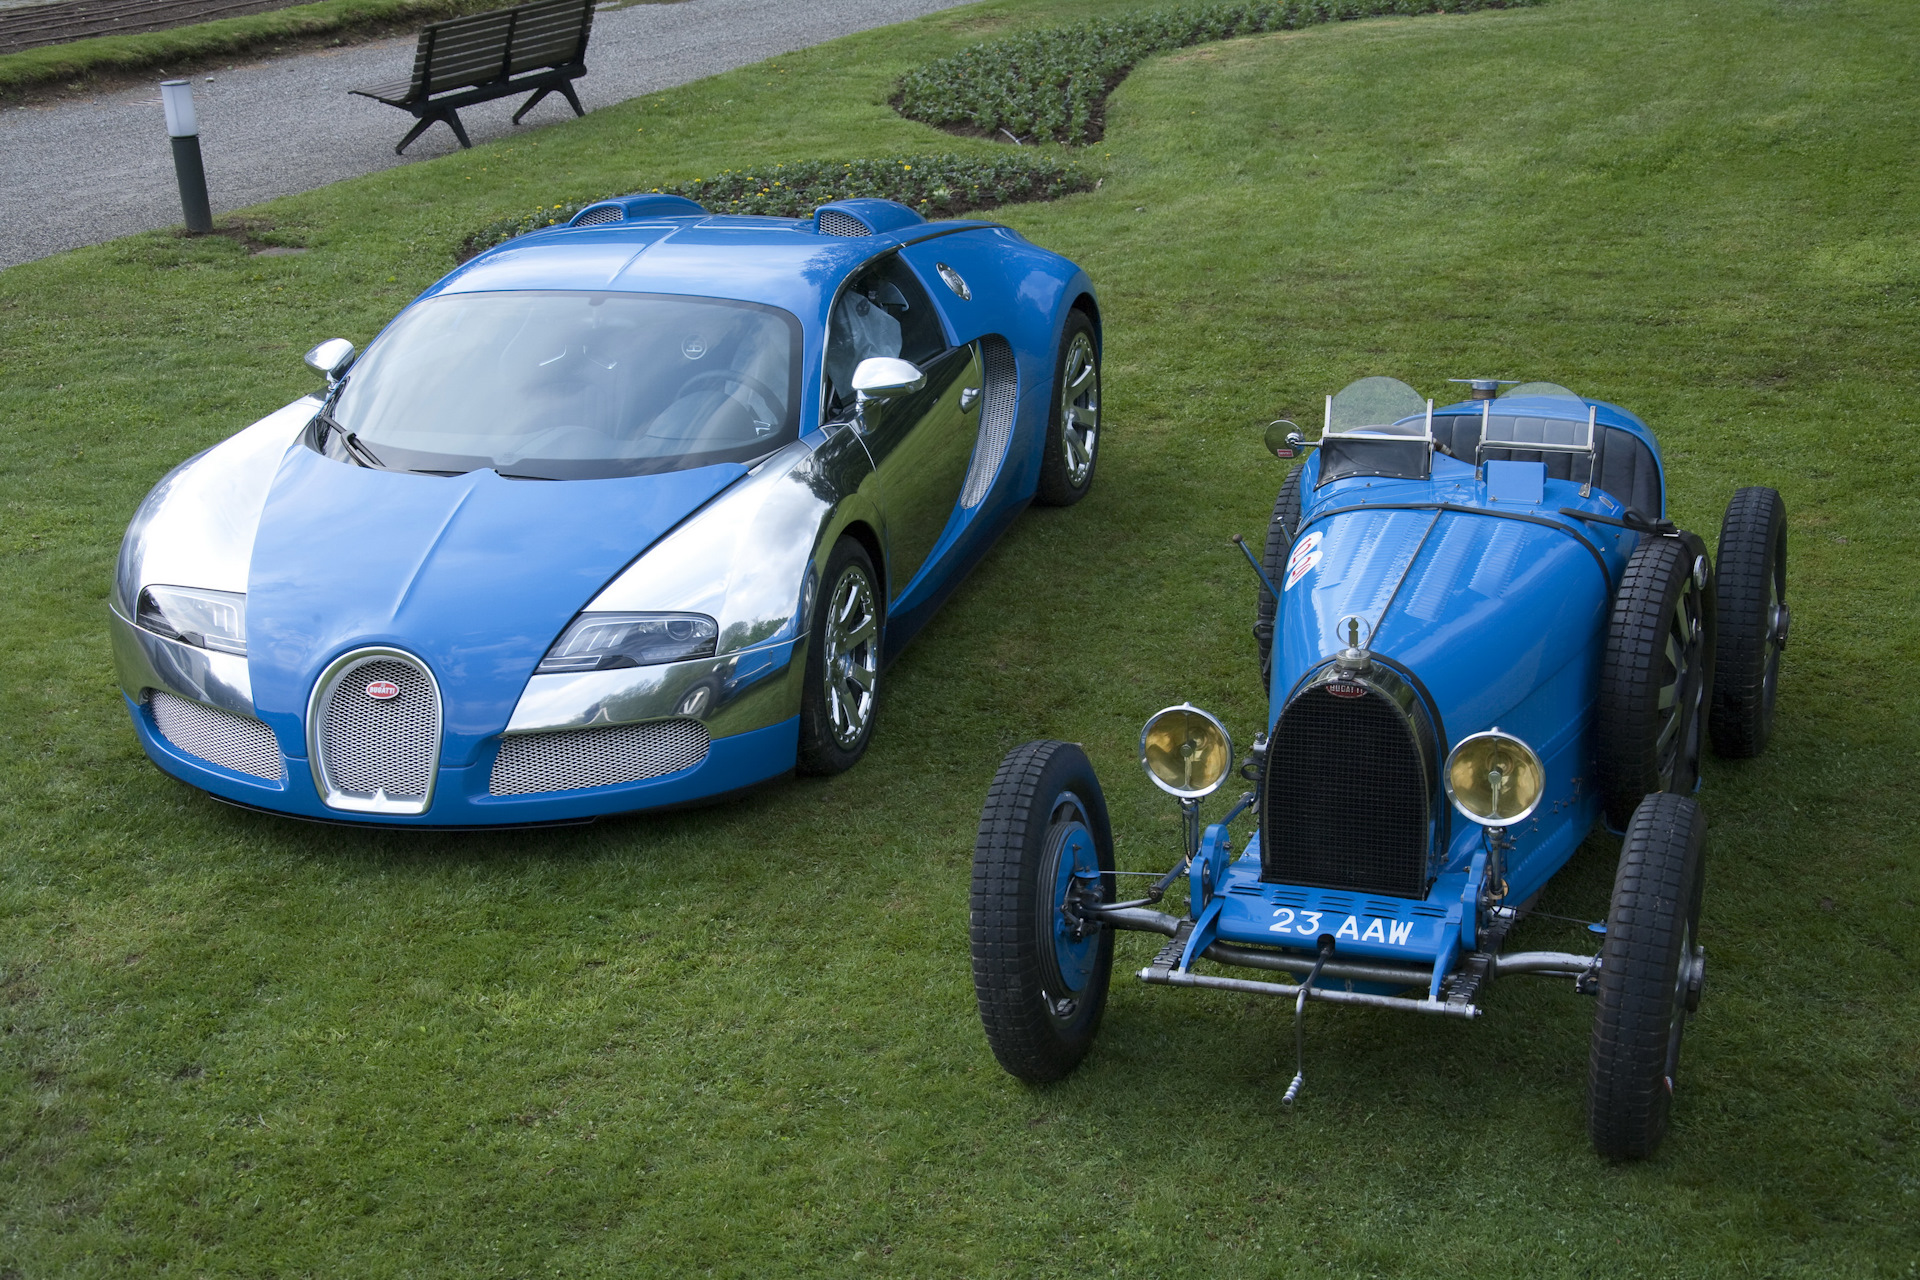 1 машина на свете. Бугатти 1 машина. Бугатти 2000. Bugatti 2009 Veyron centenaire. Бугатти 1860.